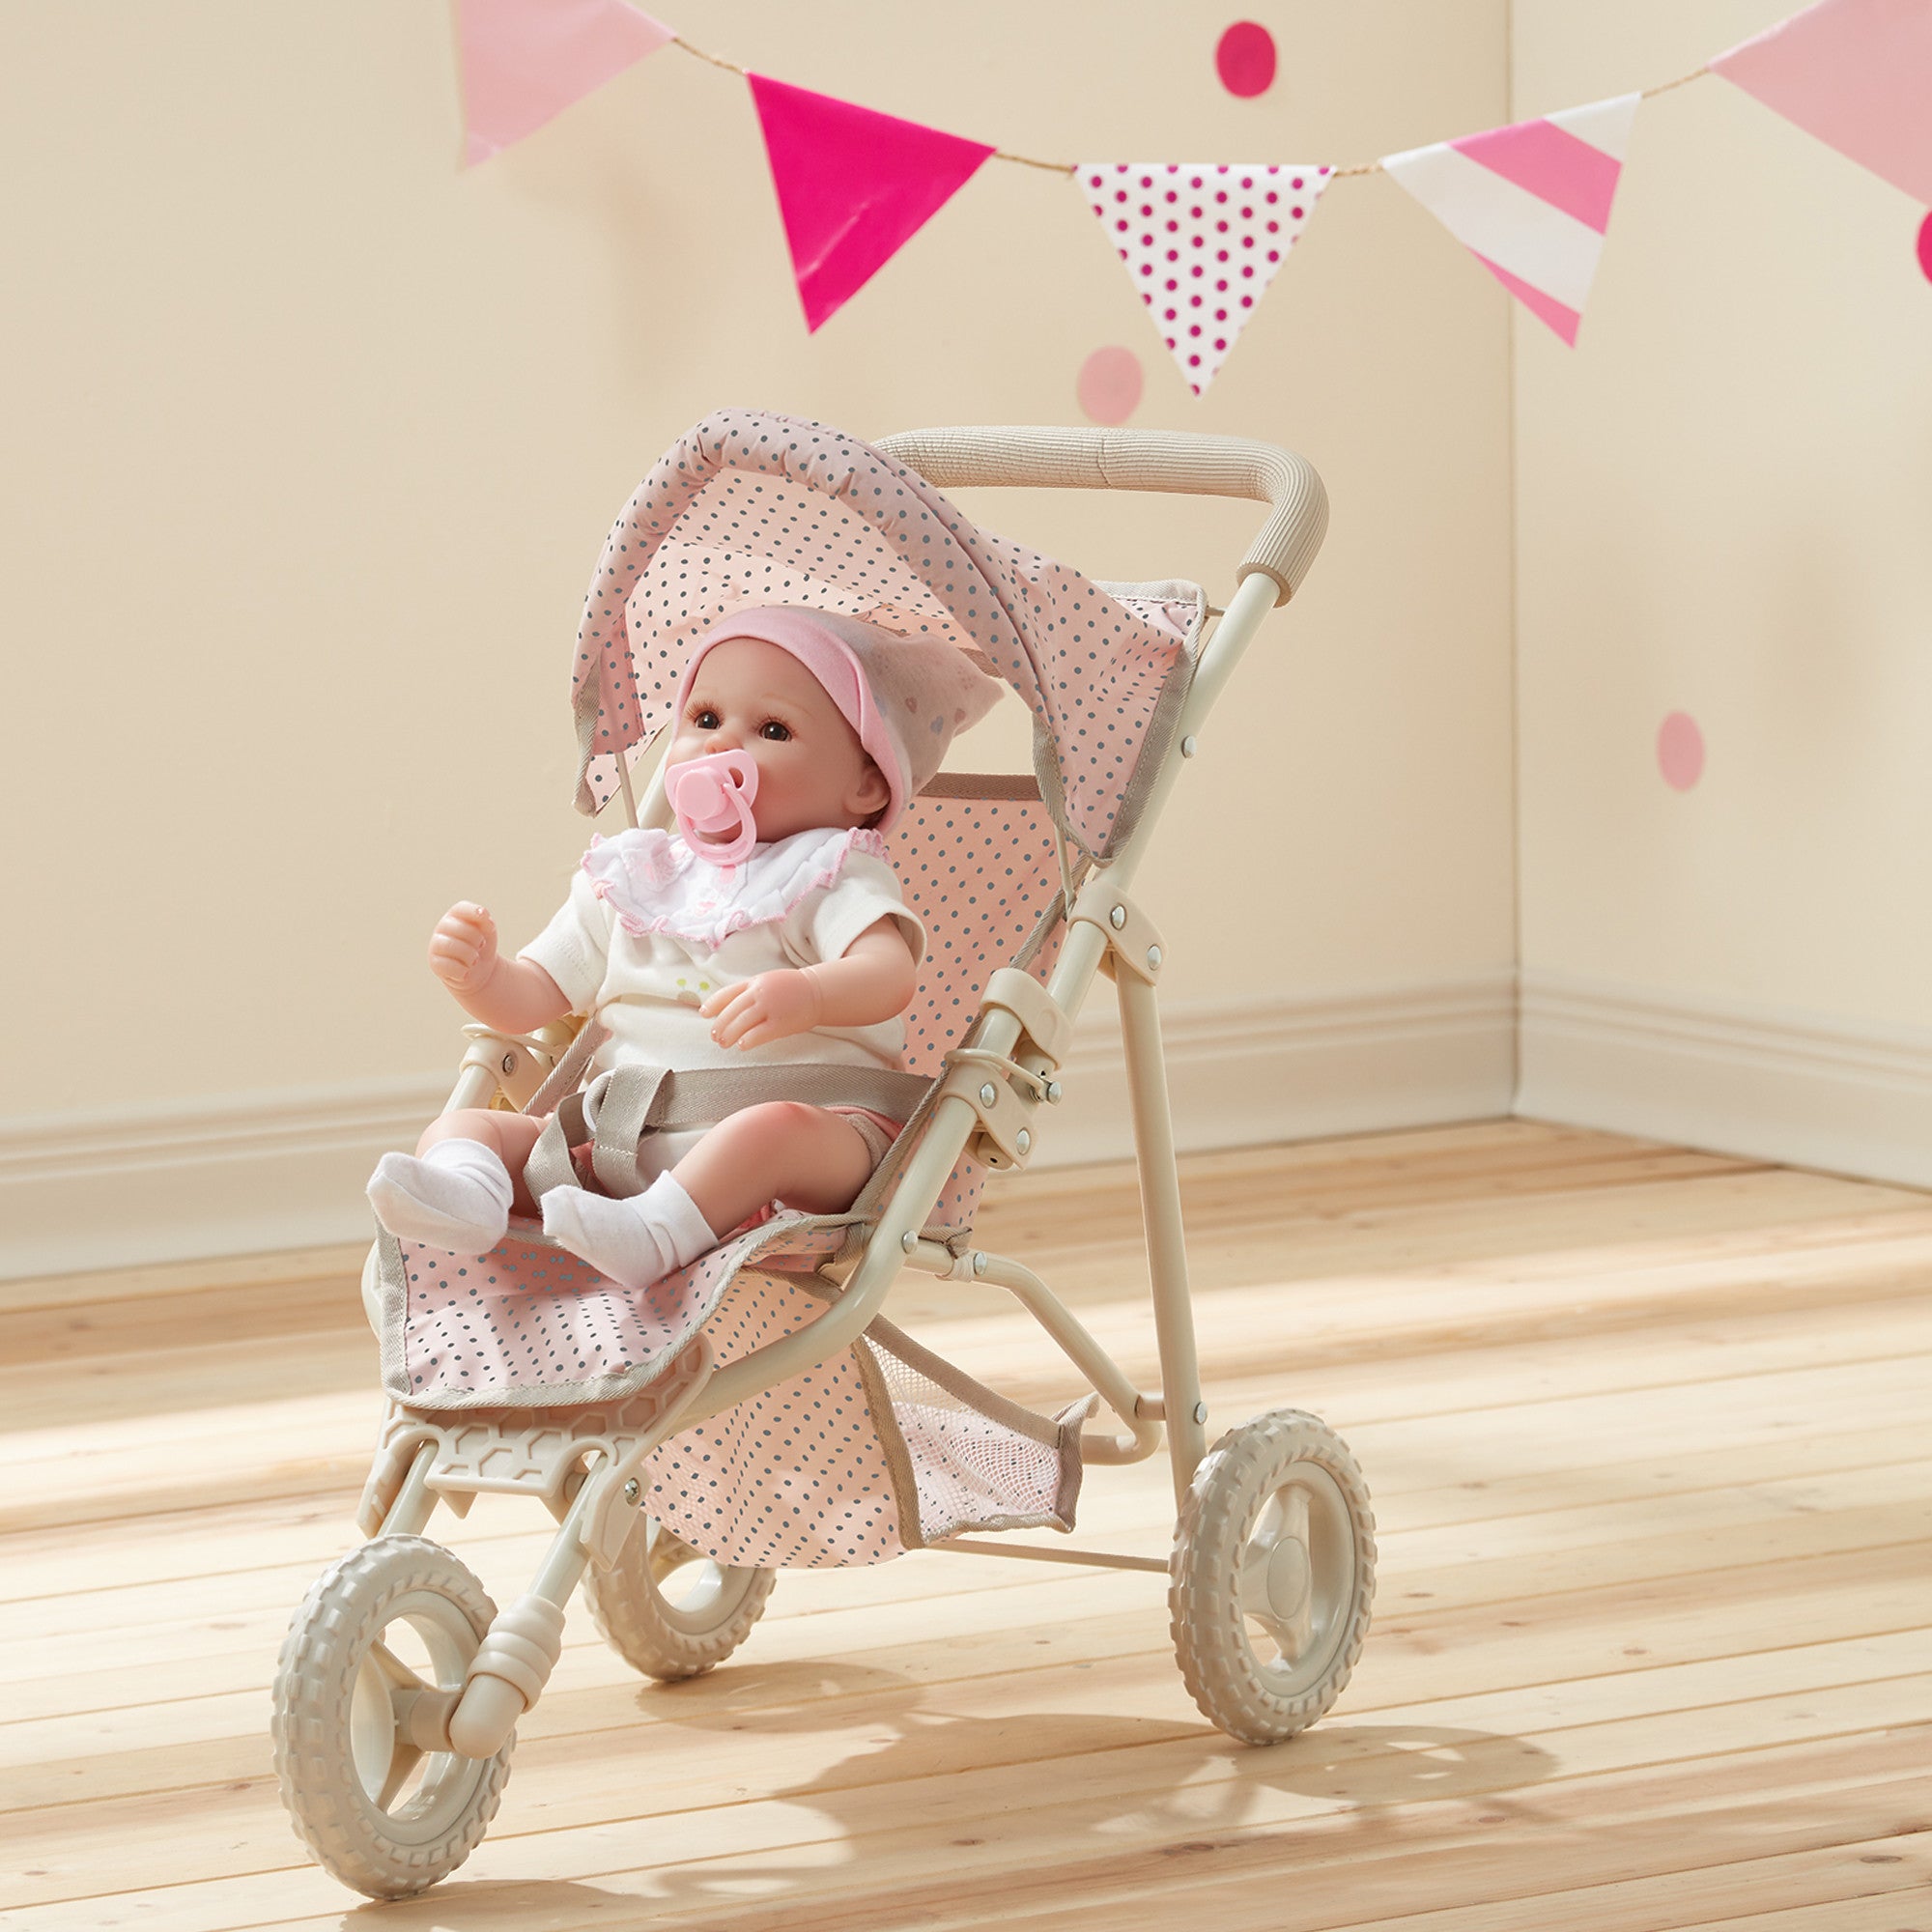 Olivia's Little World Polka Dots Princess Baby Doll Jogging Stroller, Pink